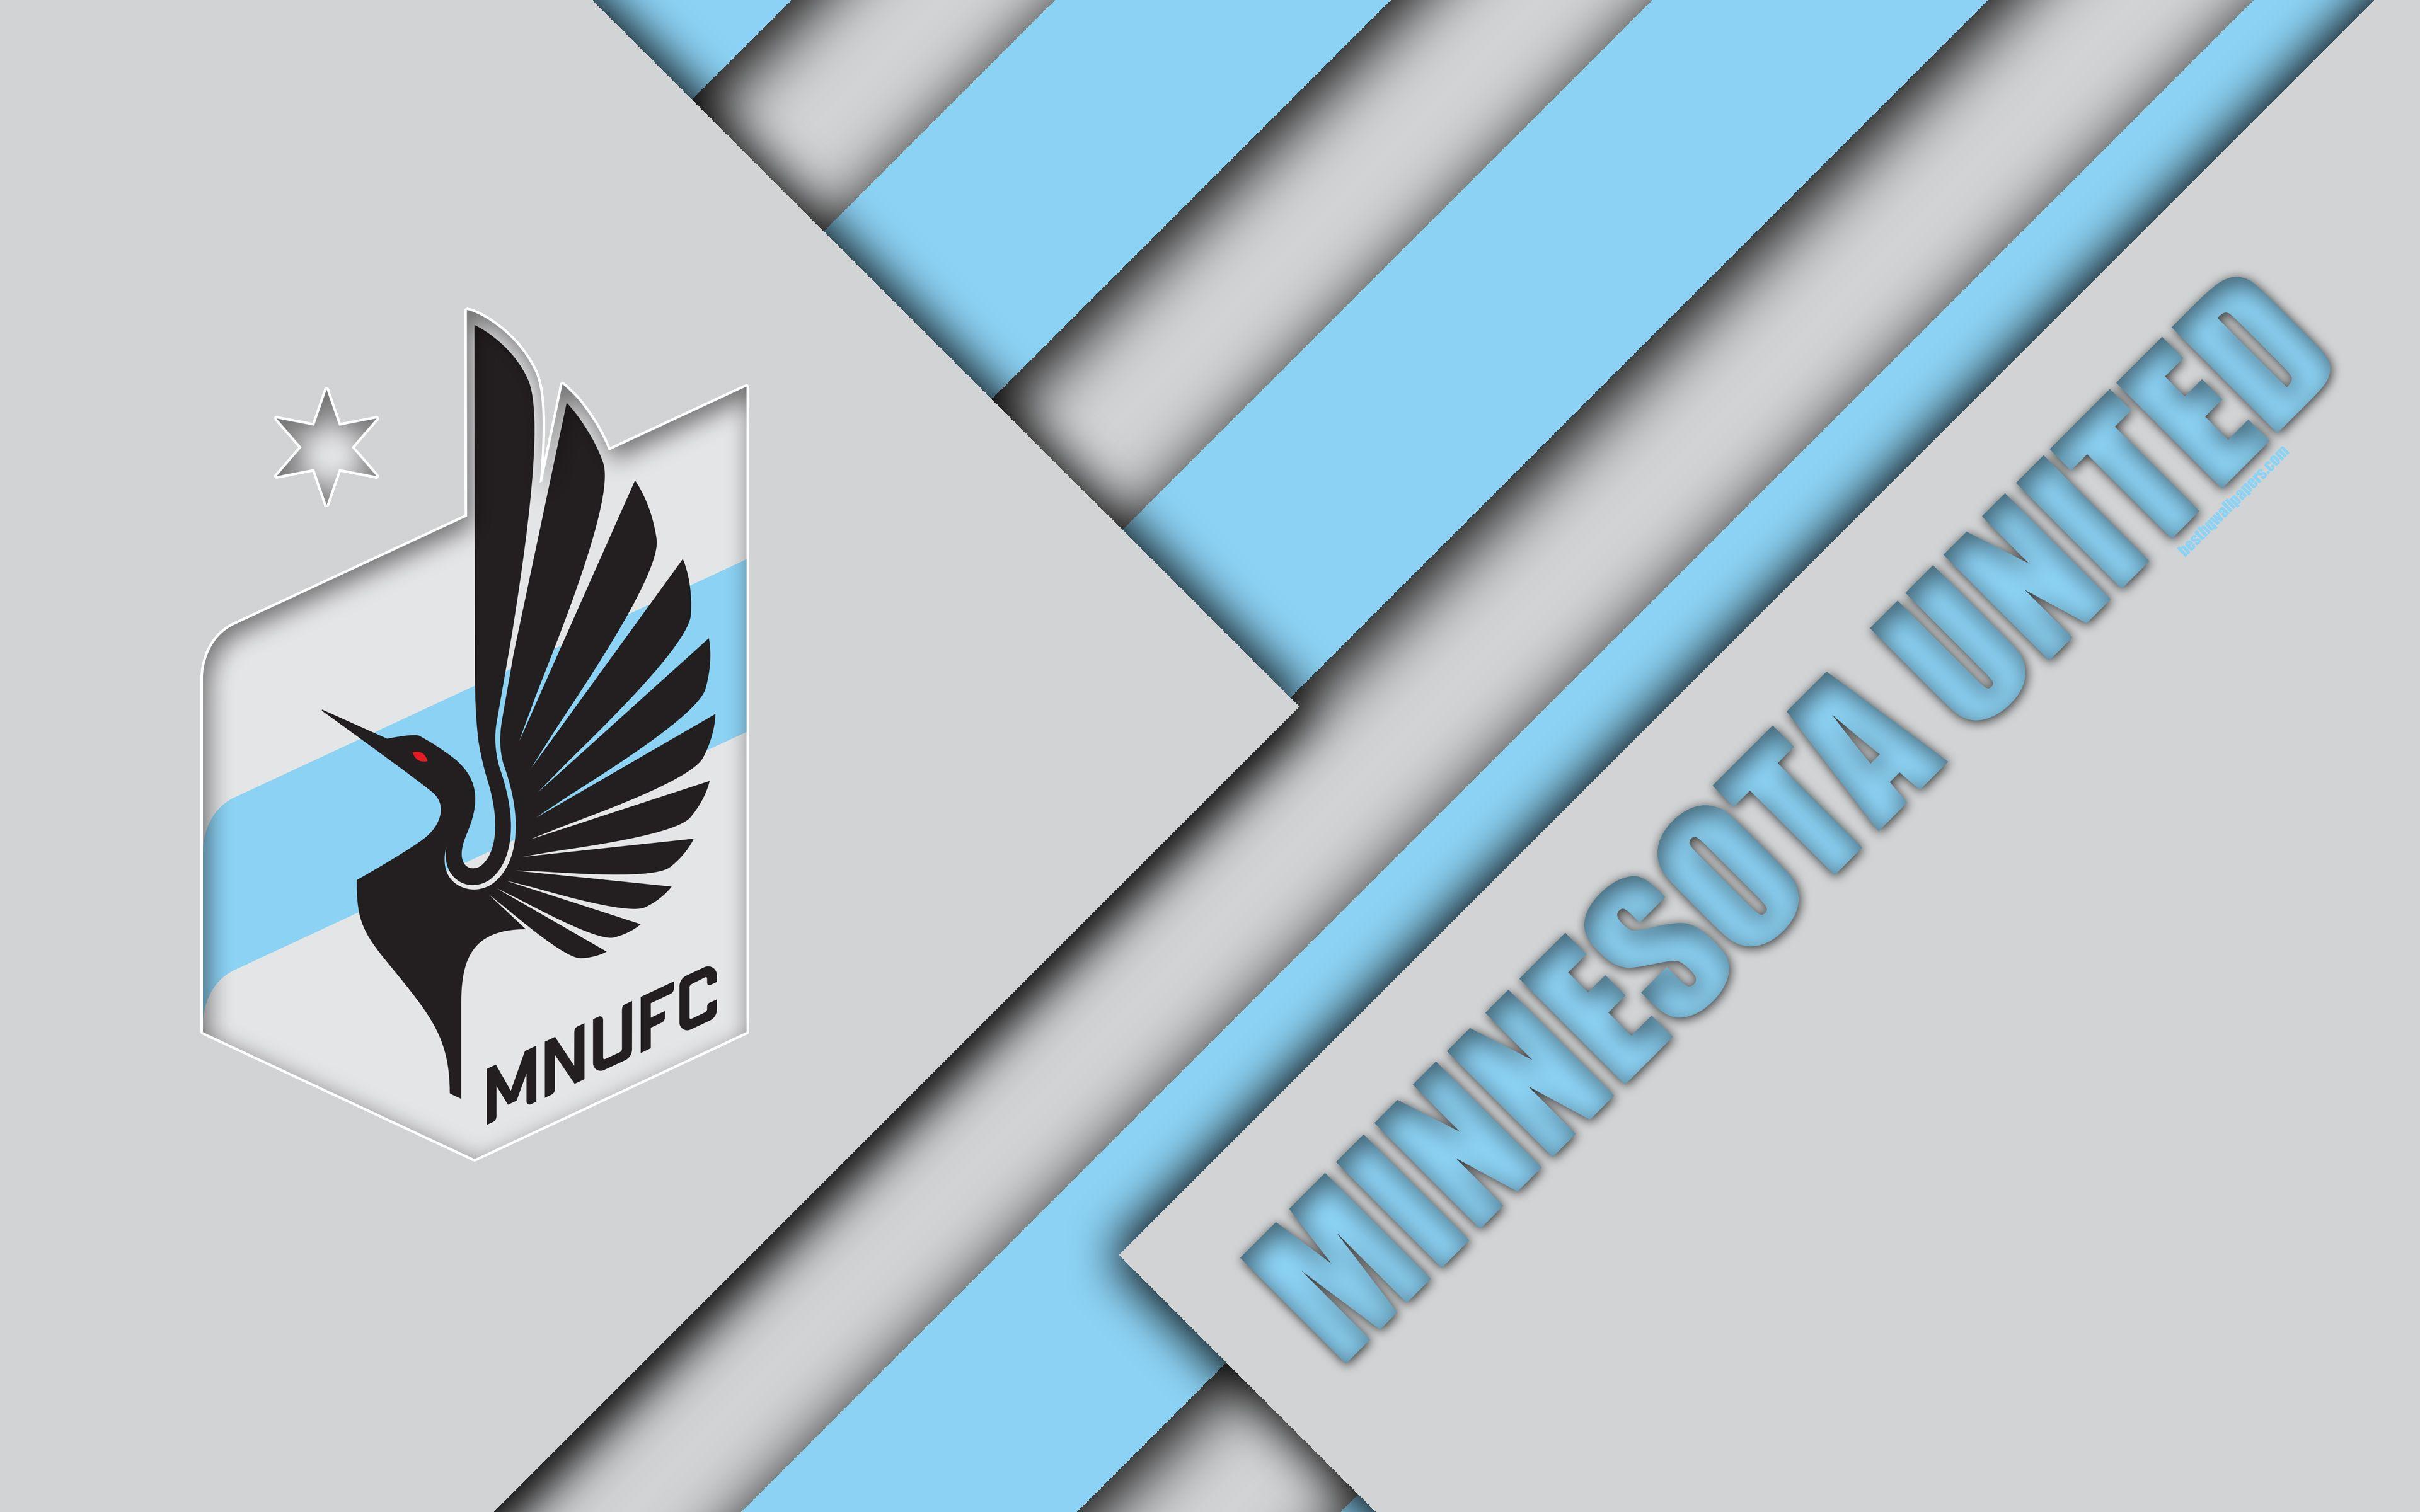 Download wallpaper Minnesota United FC, material design, 4k, logo